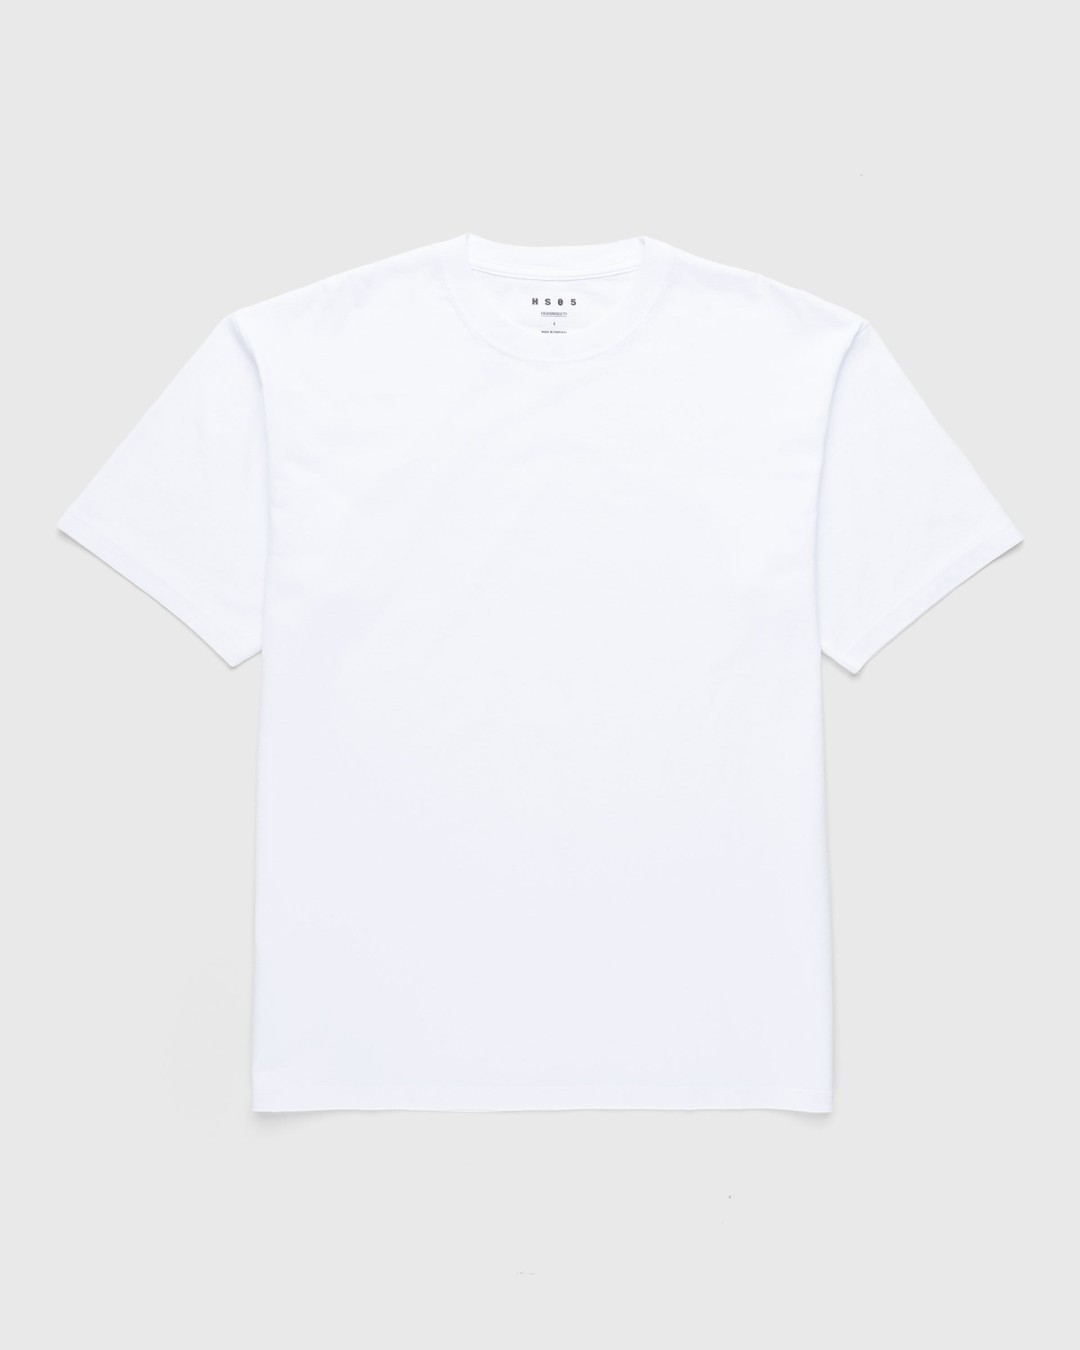 Highsnobiety HS05 – 3 Pack T-Shirts White - T-shirts - White - Image 2